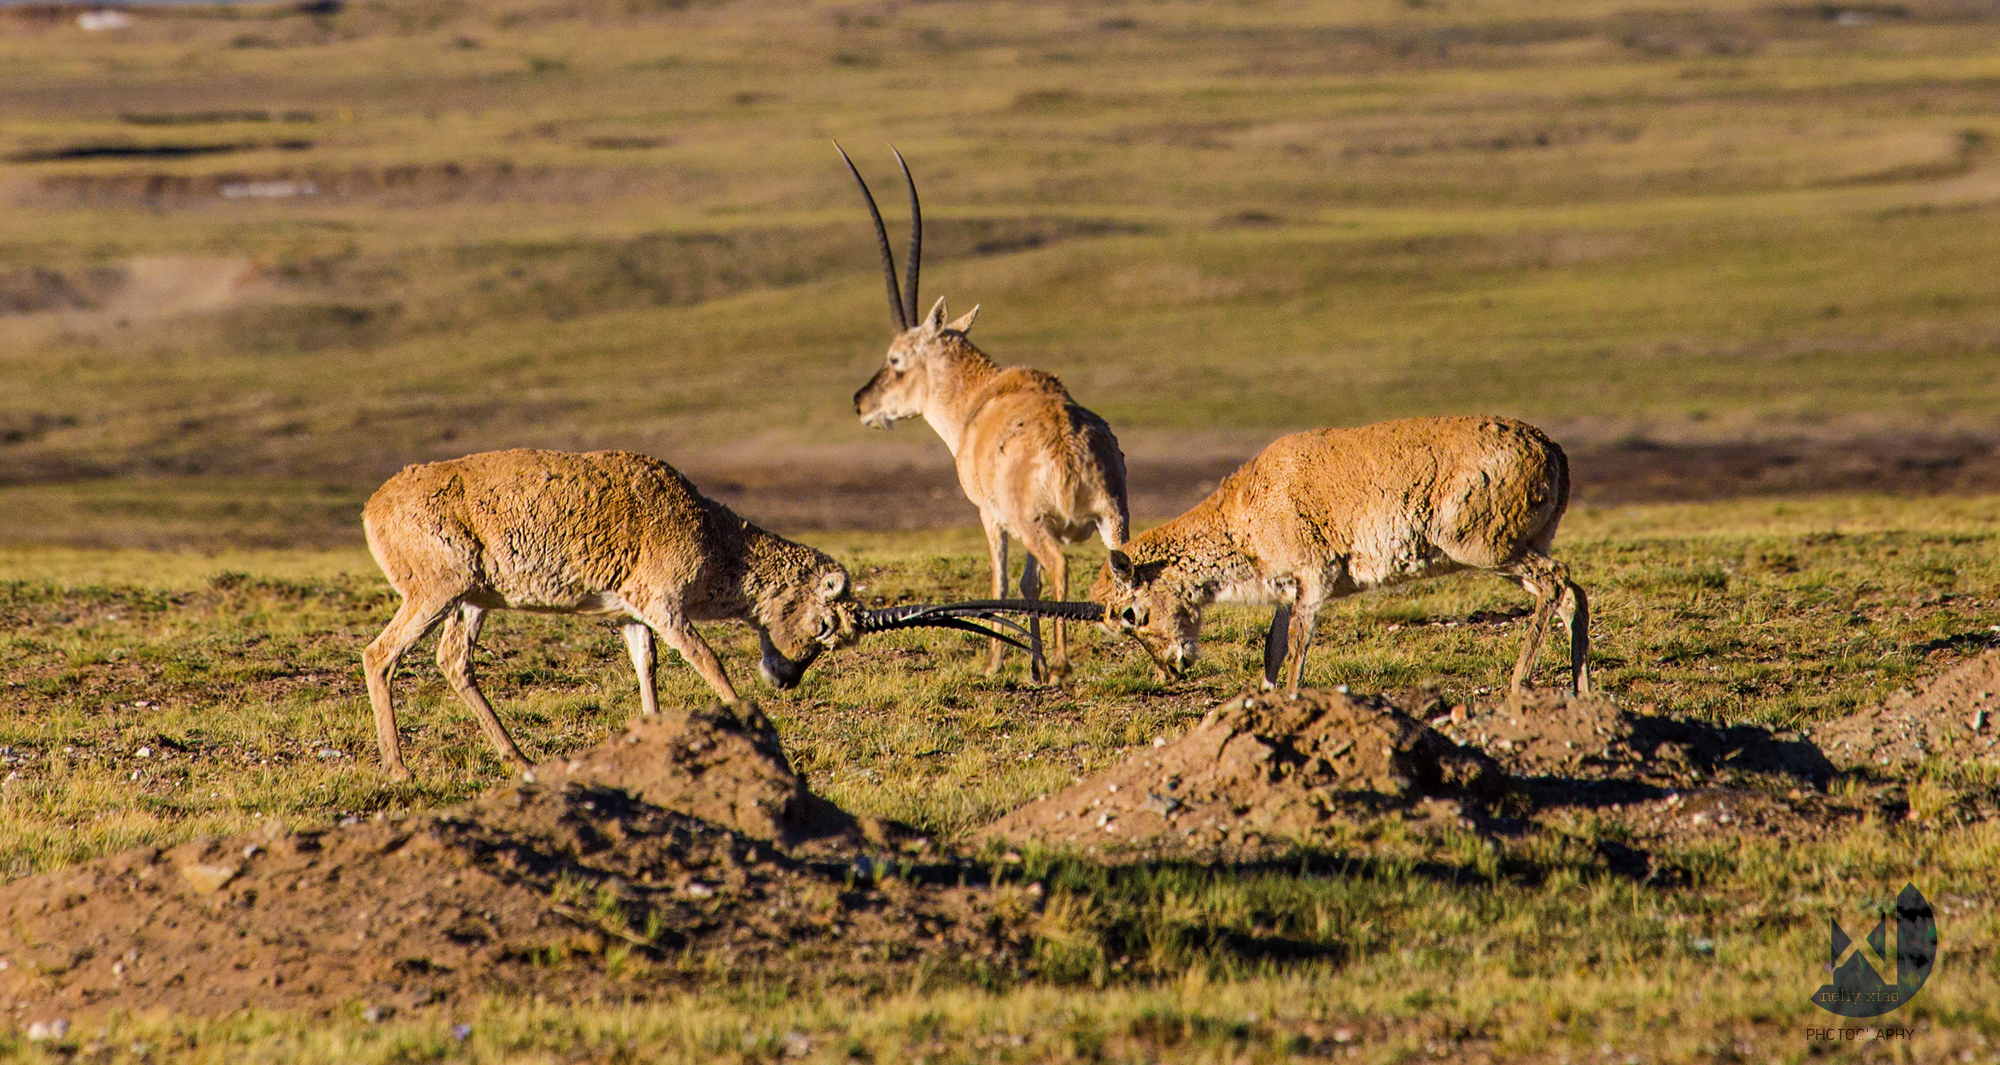   Tibetan antelopes practicing the mating battle   Kekexili Wildlife Conservation, July 2015 